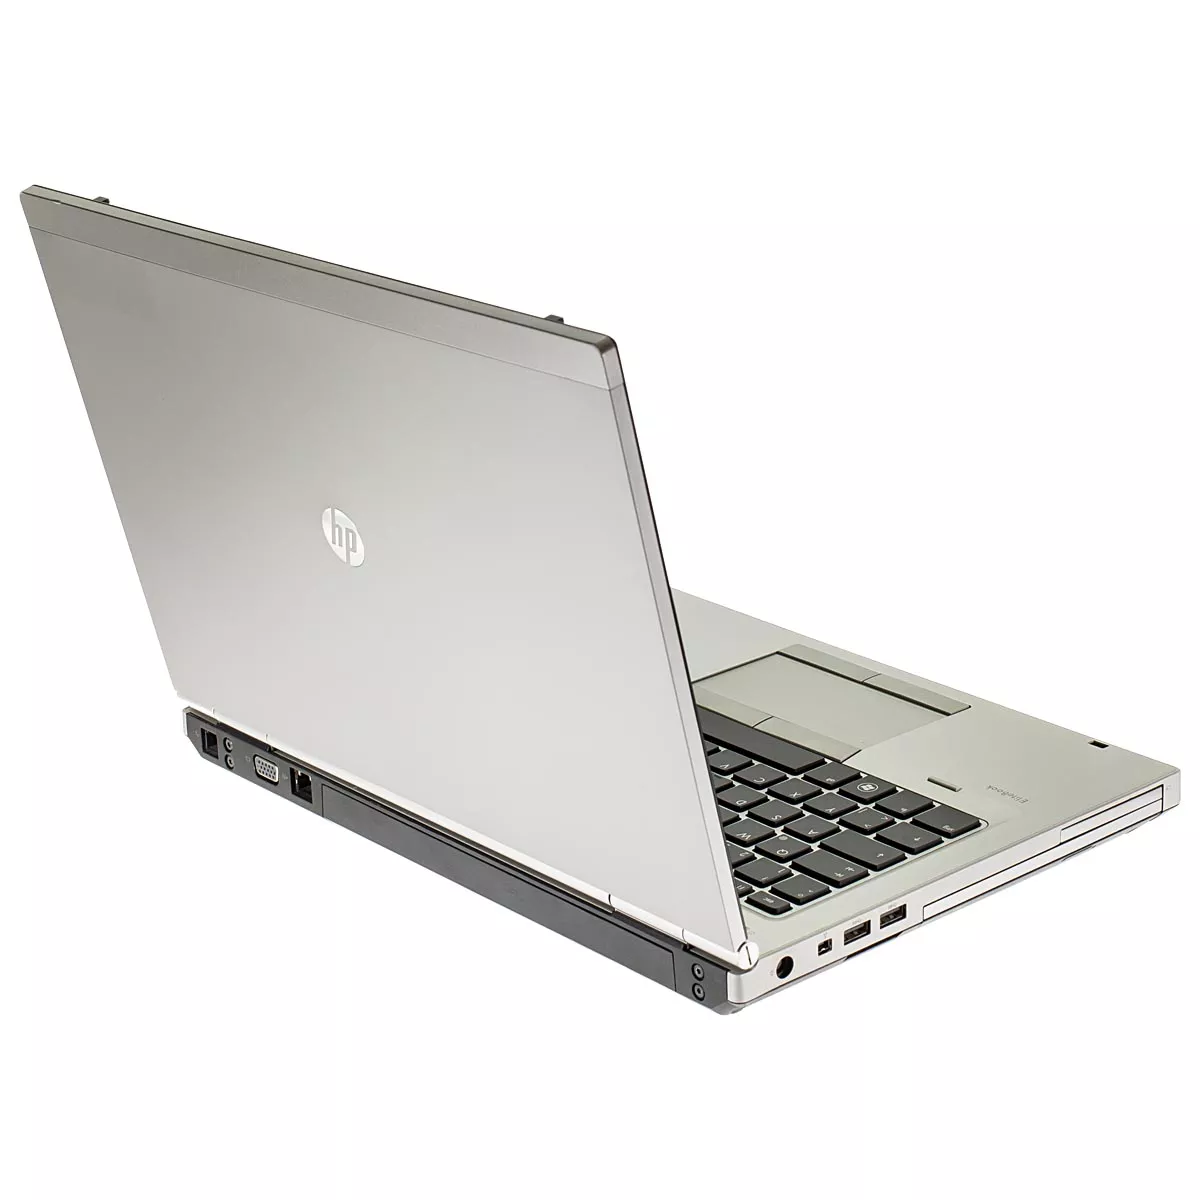 HP Elitebook 8470p i5 3230M 2,6 GHz Webcam B-Ware